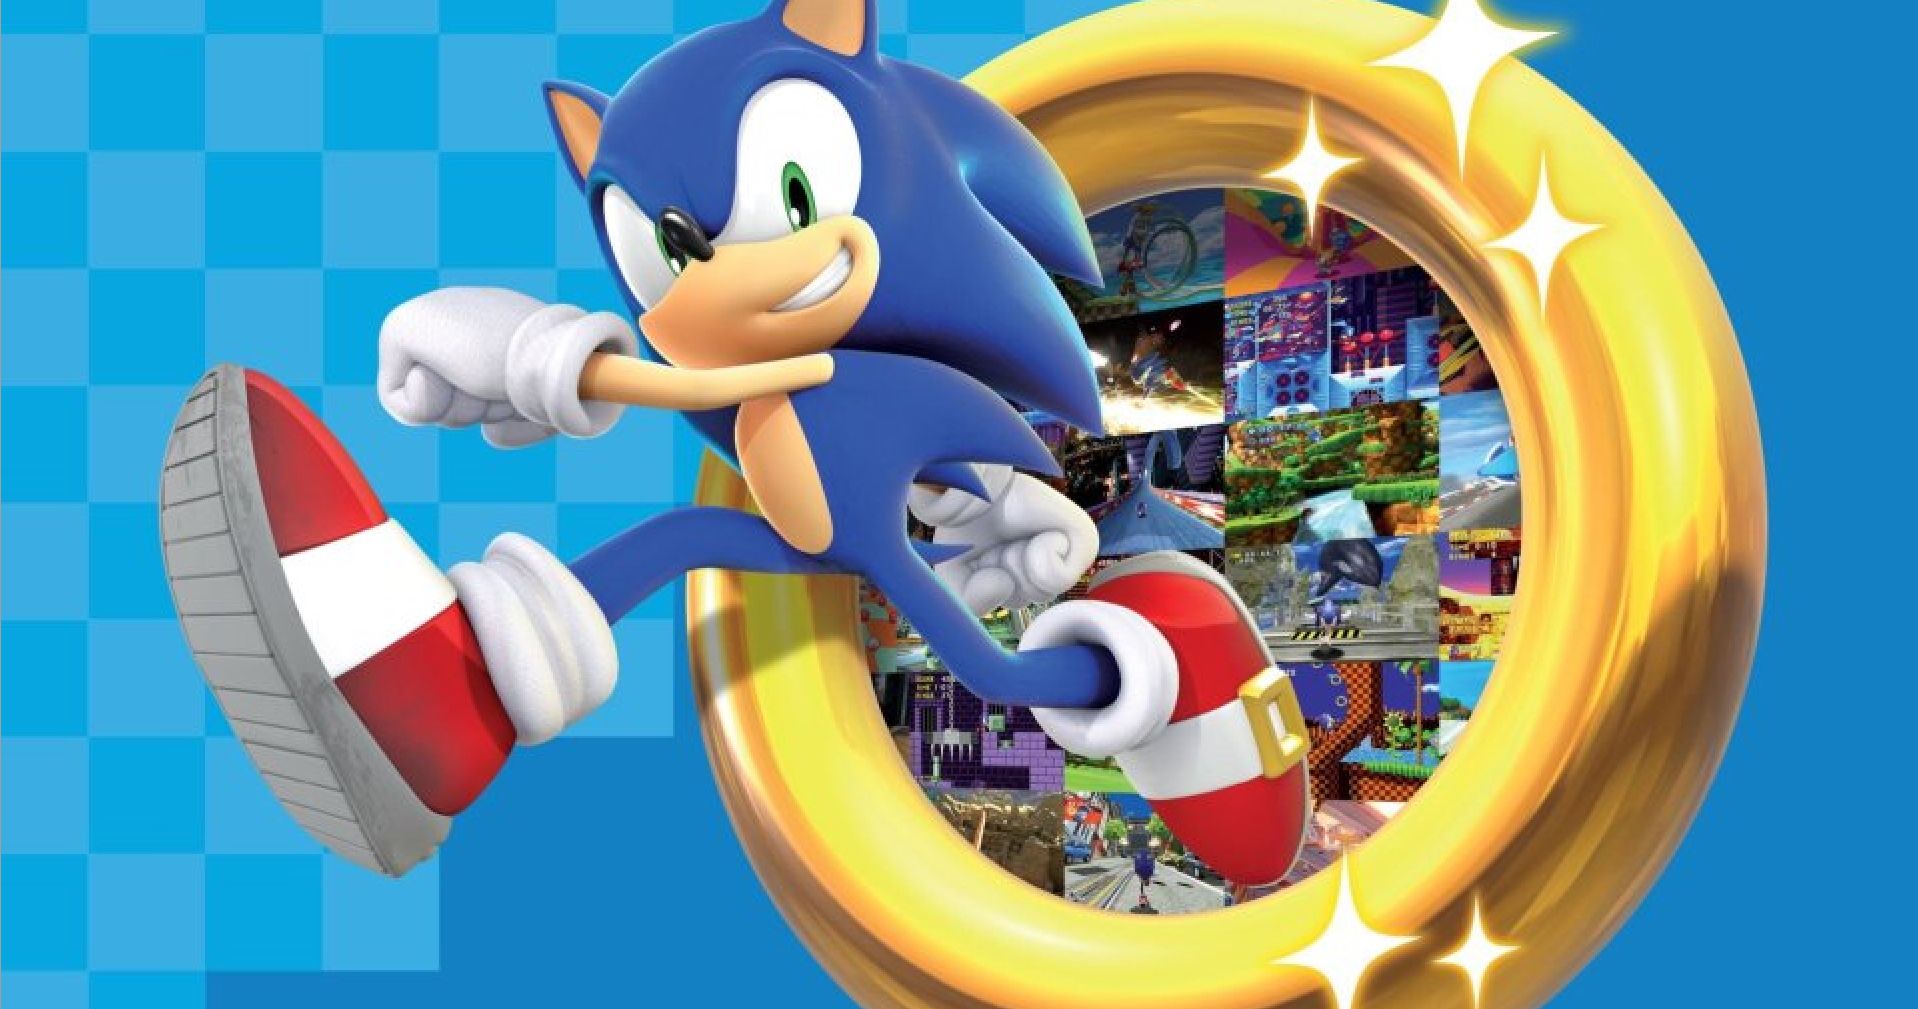 Sonic the Hedgehog 2 Team Celebrates Franchise's 30th Anniversary Alongside Fans